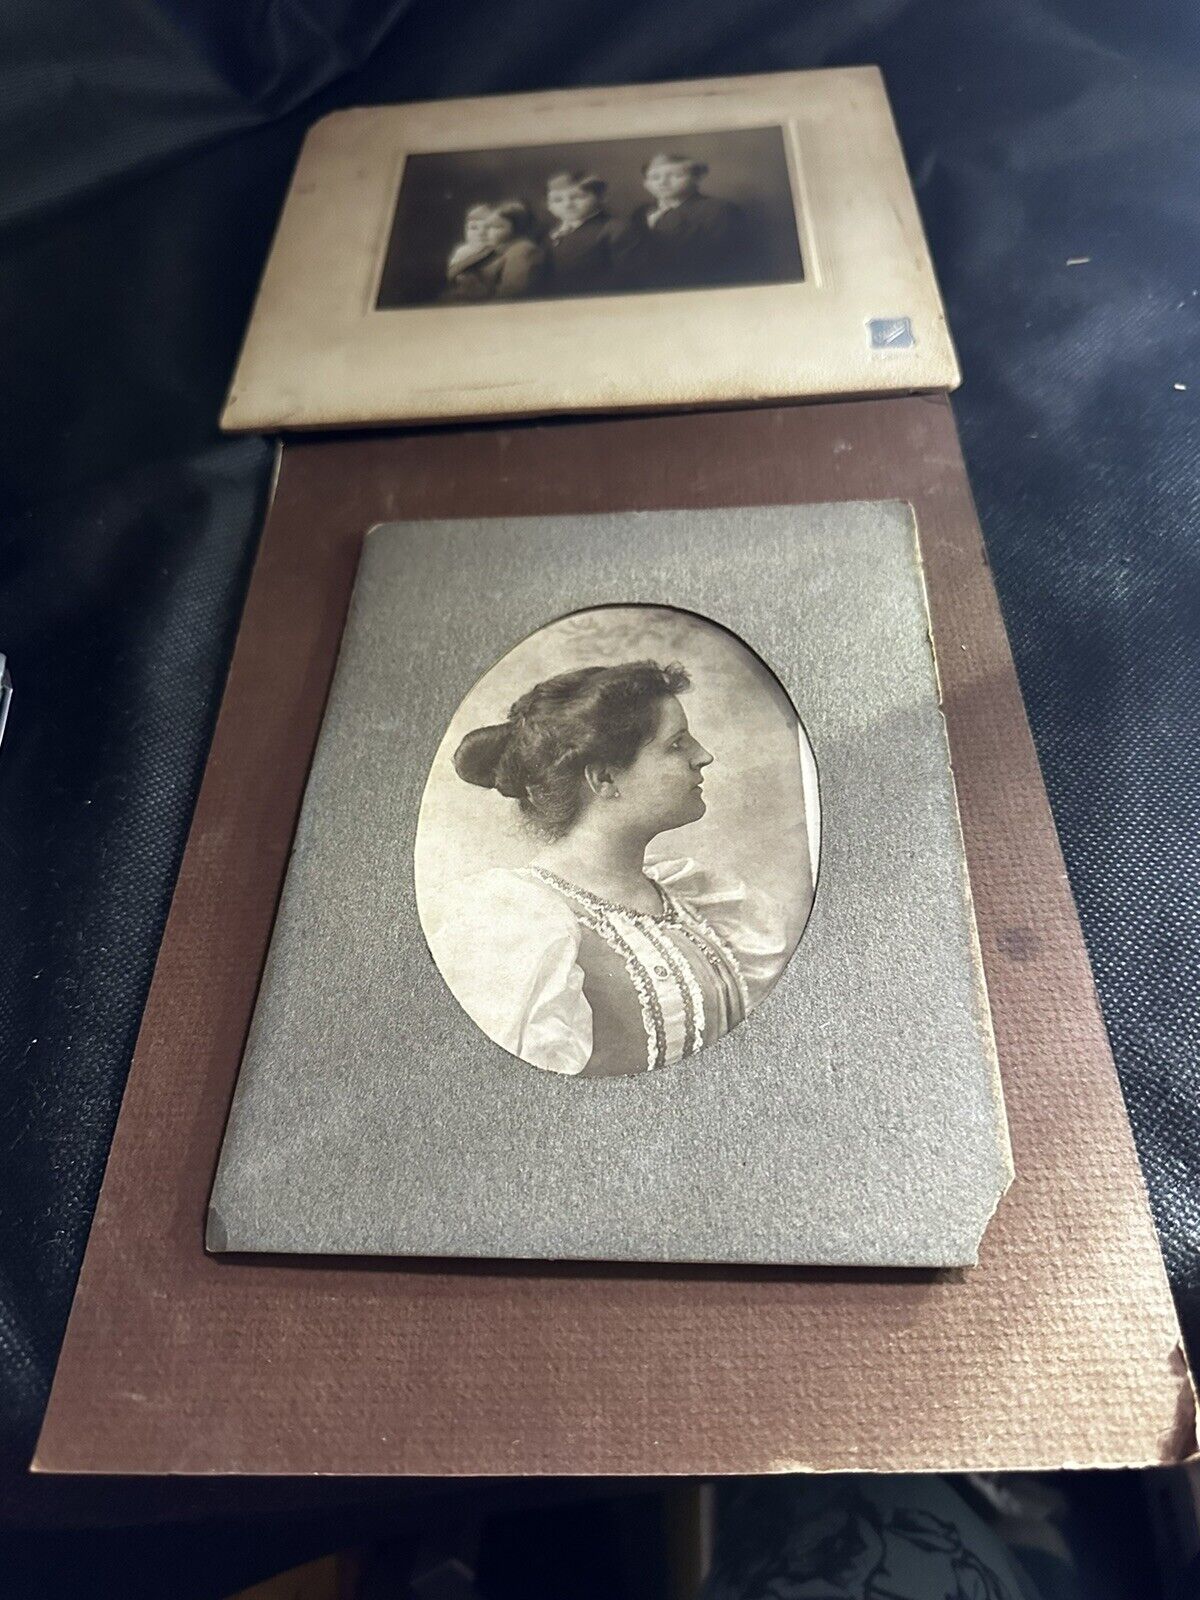 2 Photocard Antique Oval Photos  On Board Woman 19th Century Dress And 3 Boys